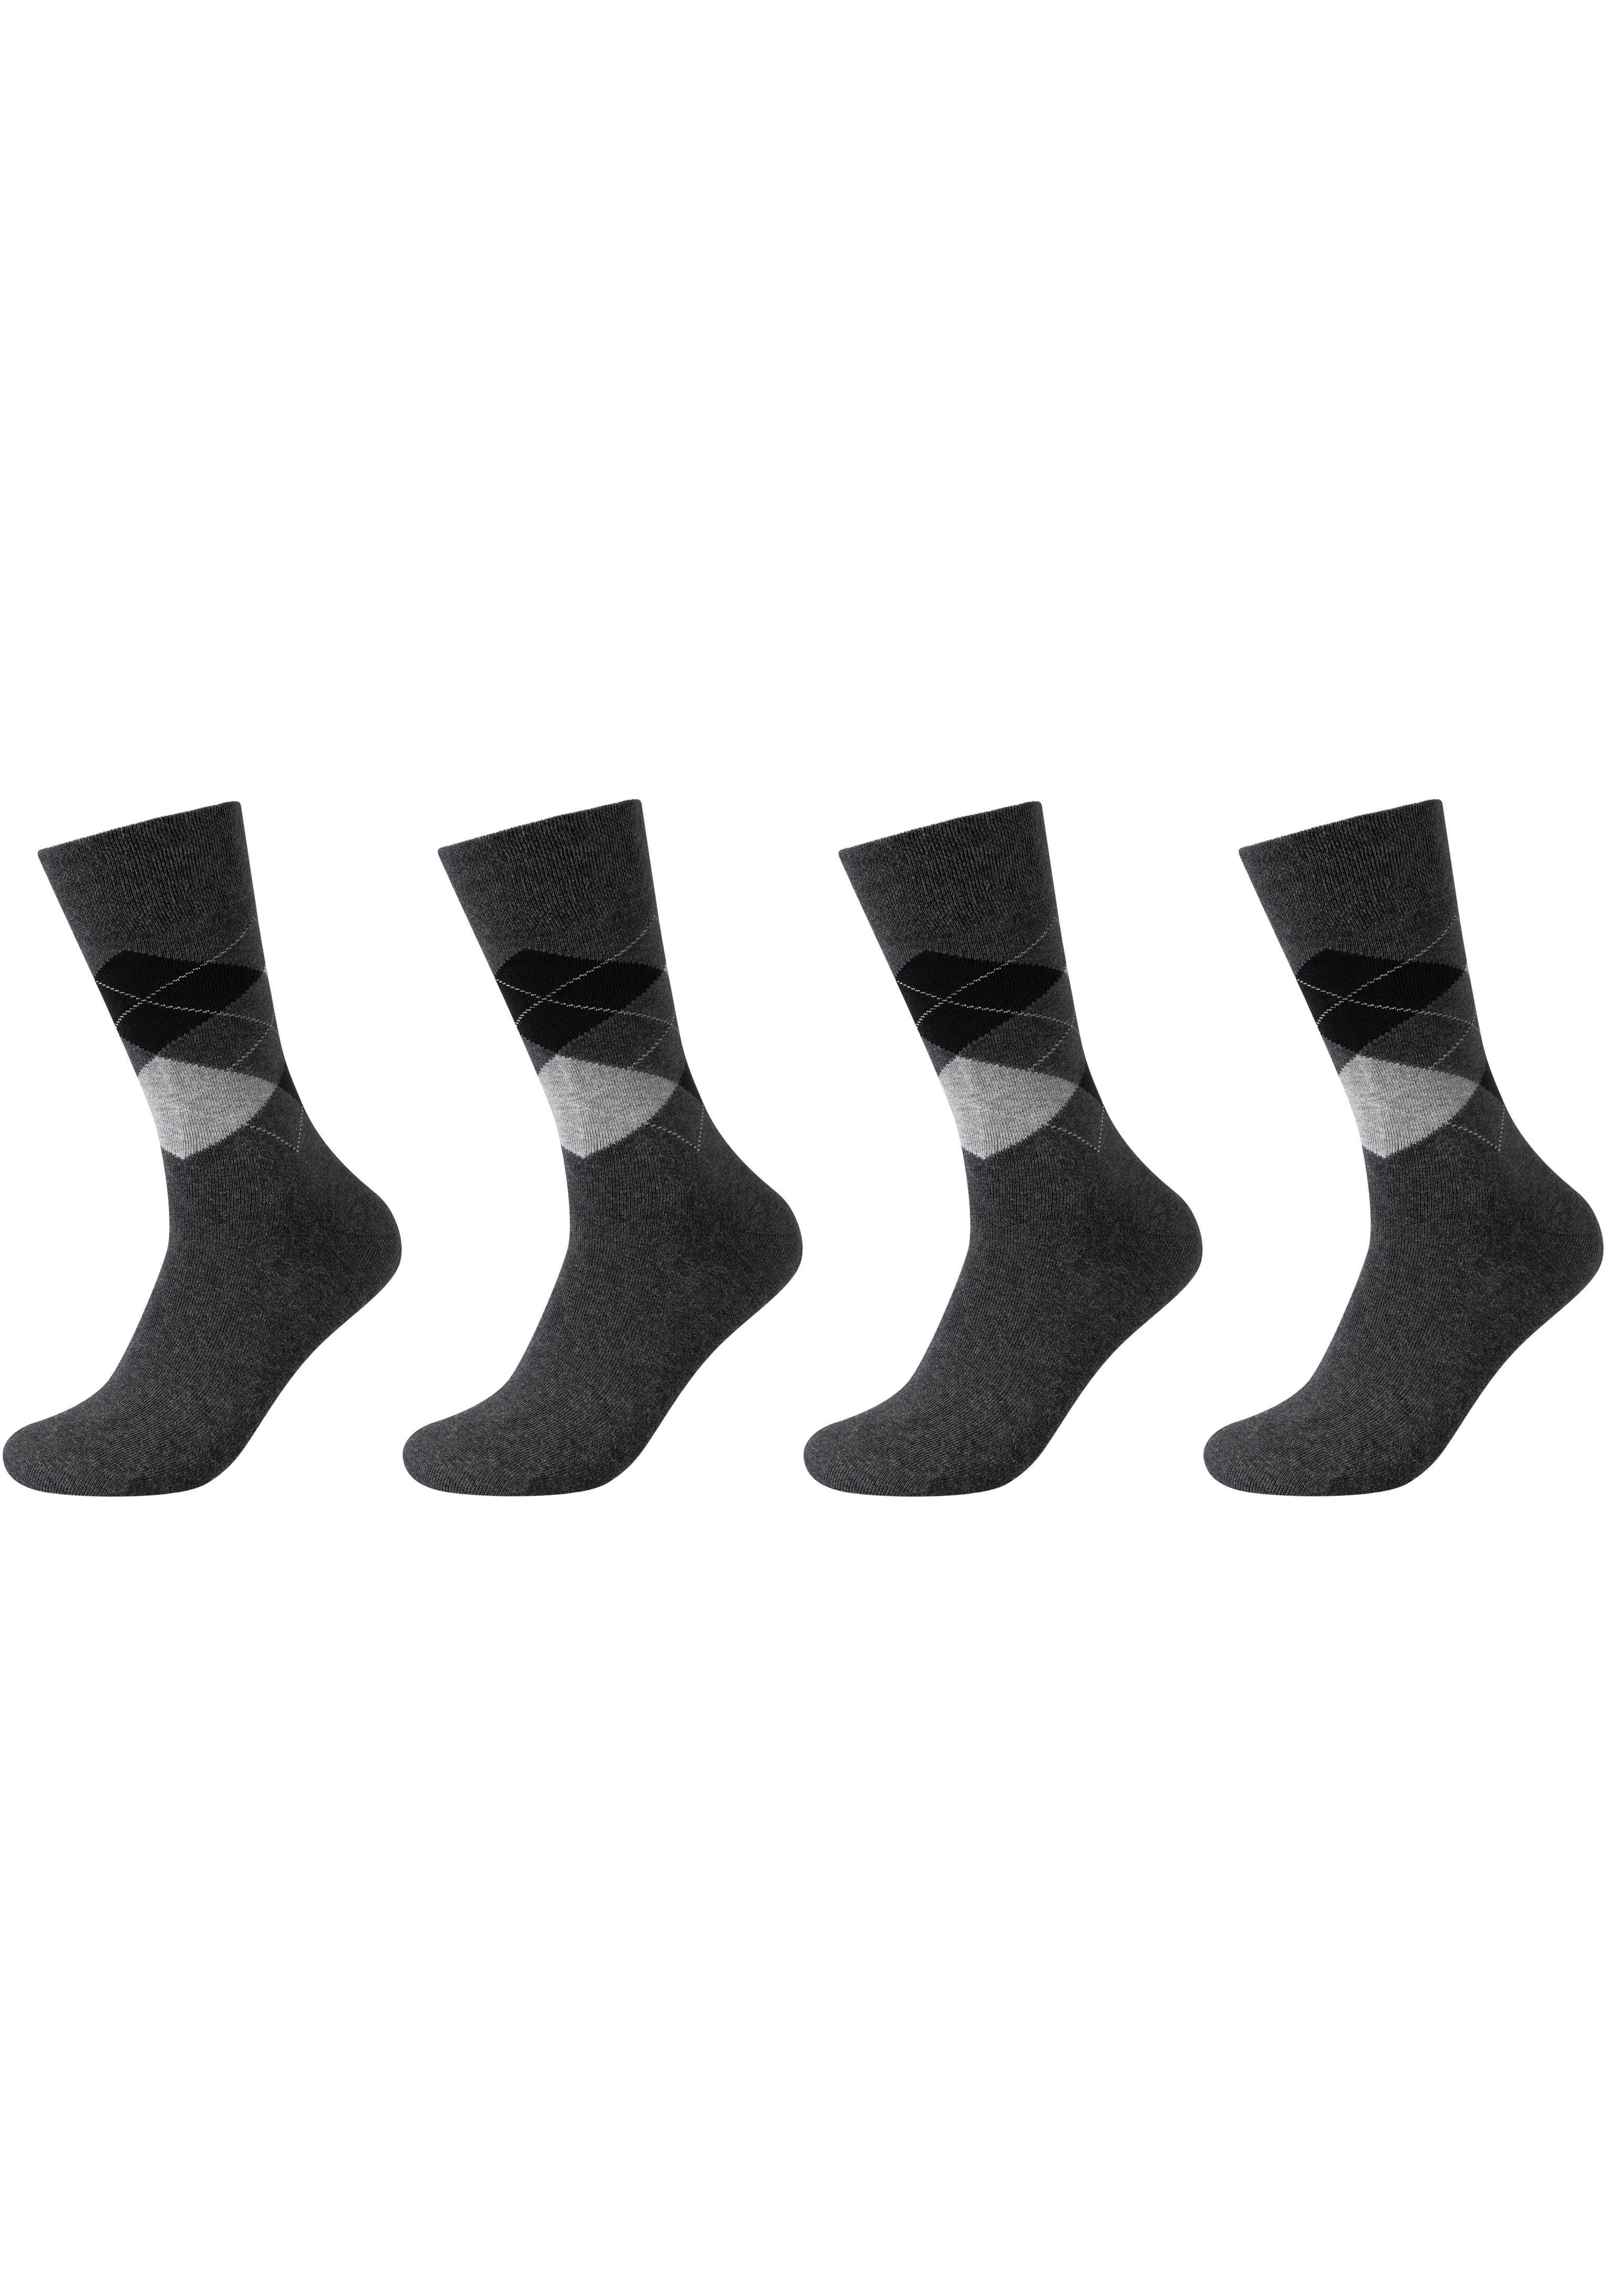 Camano Socken (Packung, 4-Paar) Faltenfreier Tragekomfort dank Elasthan-Anteil anthrazit